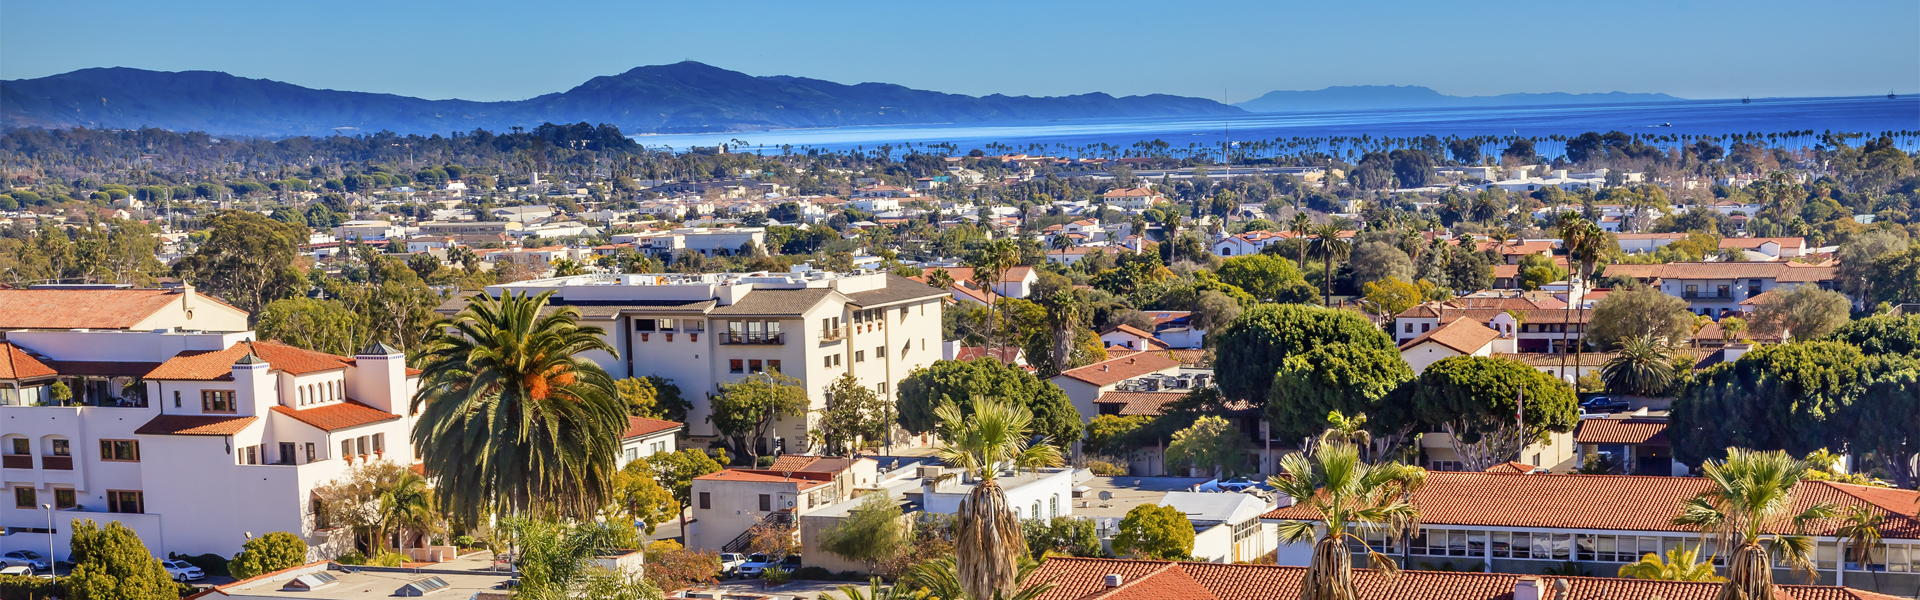 Santa Barbara - Buy Your Dream Home